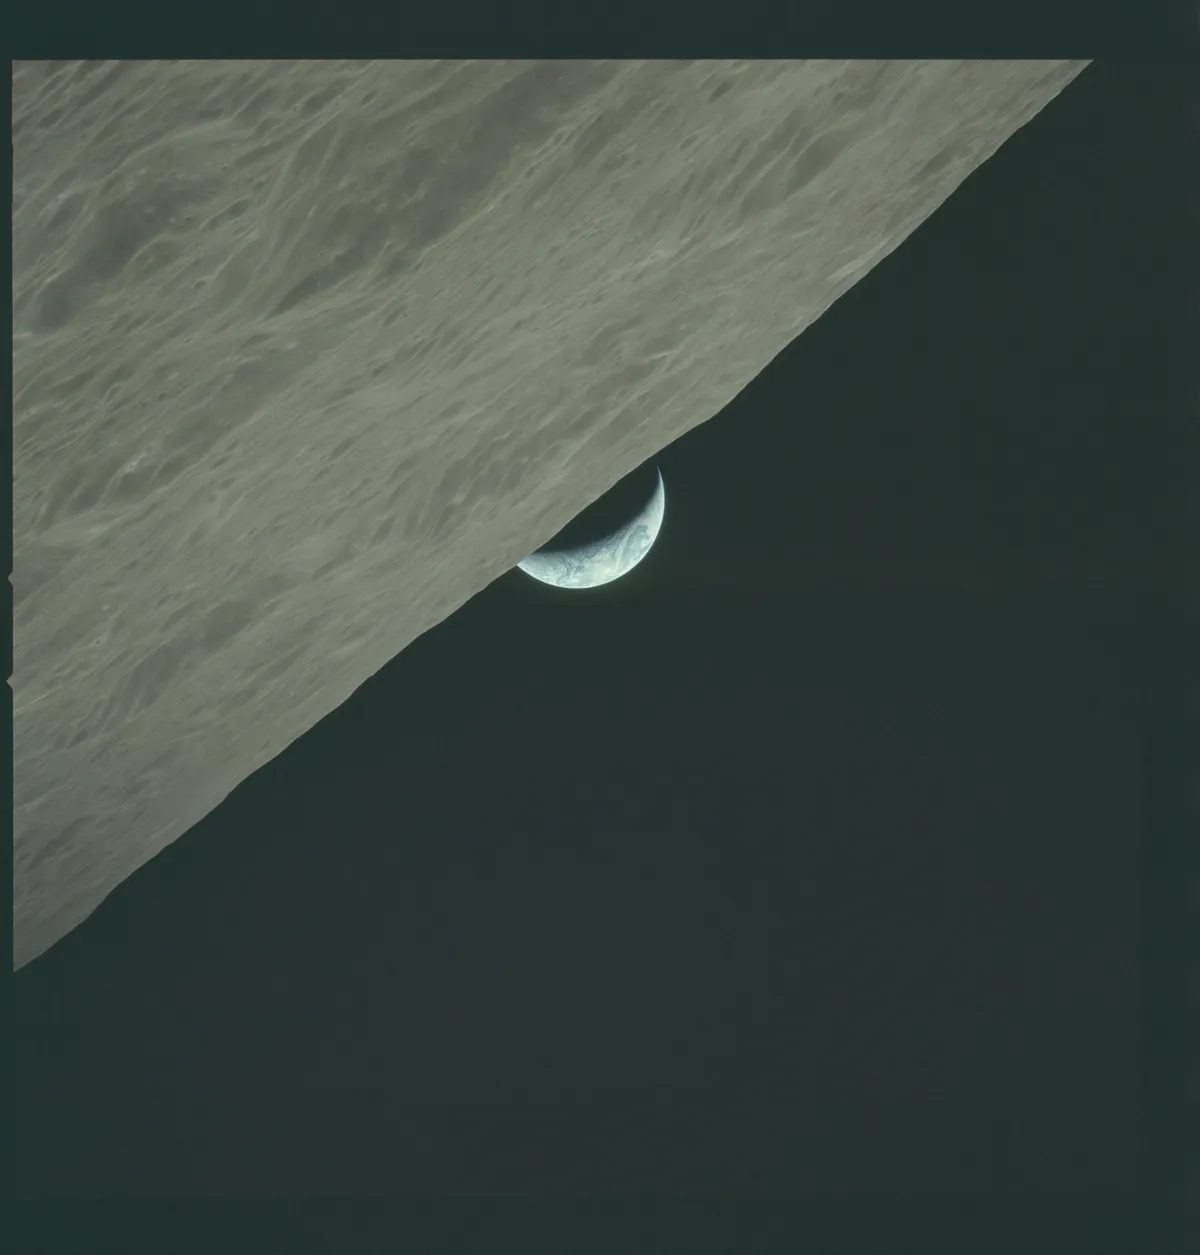 AS17-152-23273 - Apollo 17 Hasselblad image from film magazine 152/PP - Lunar orbit, Transearth coast, SIM Bay EVA / film retrieval